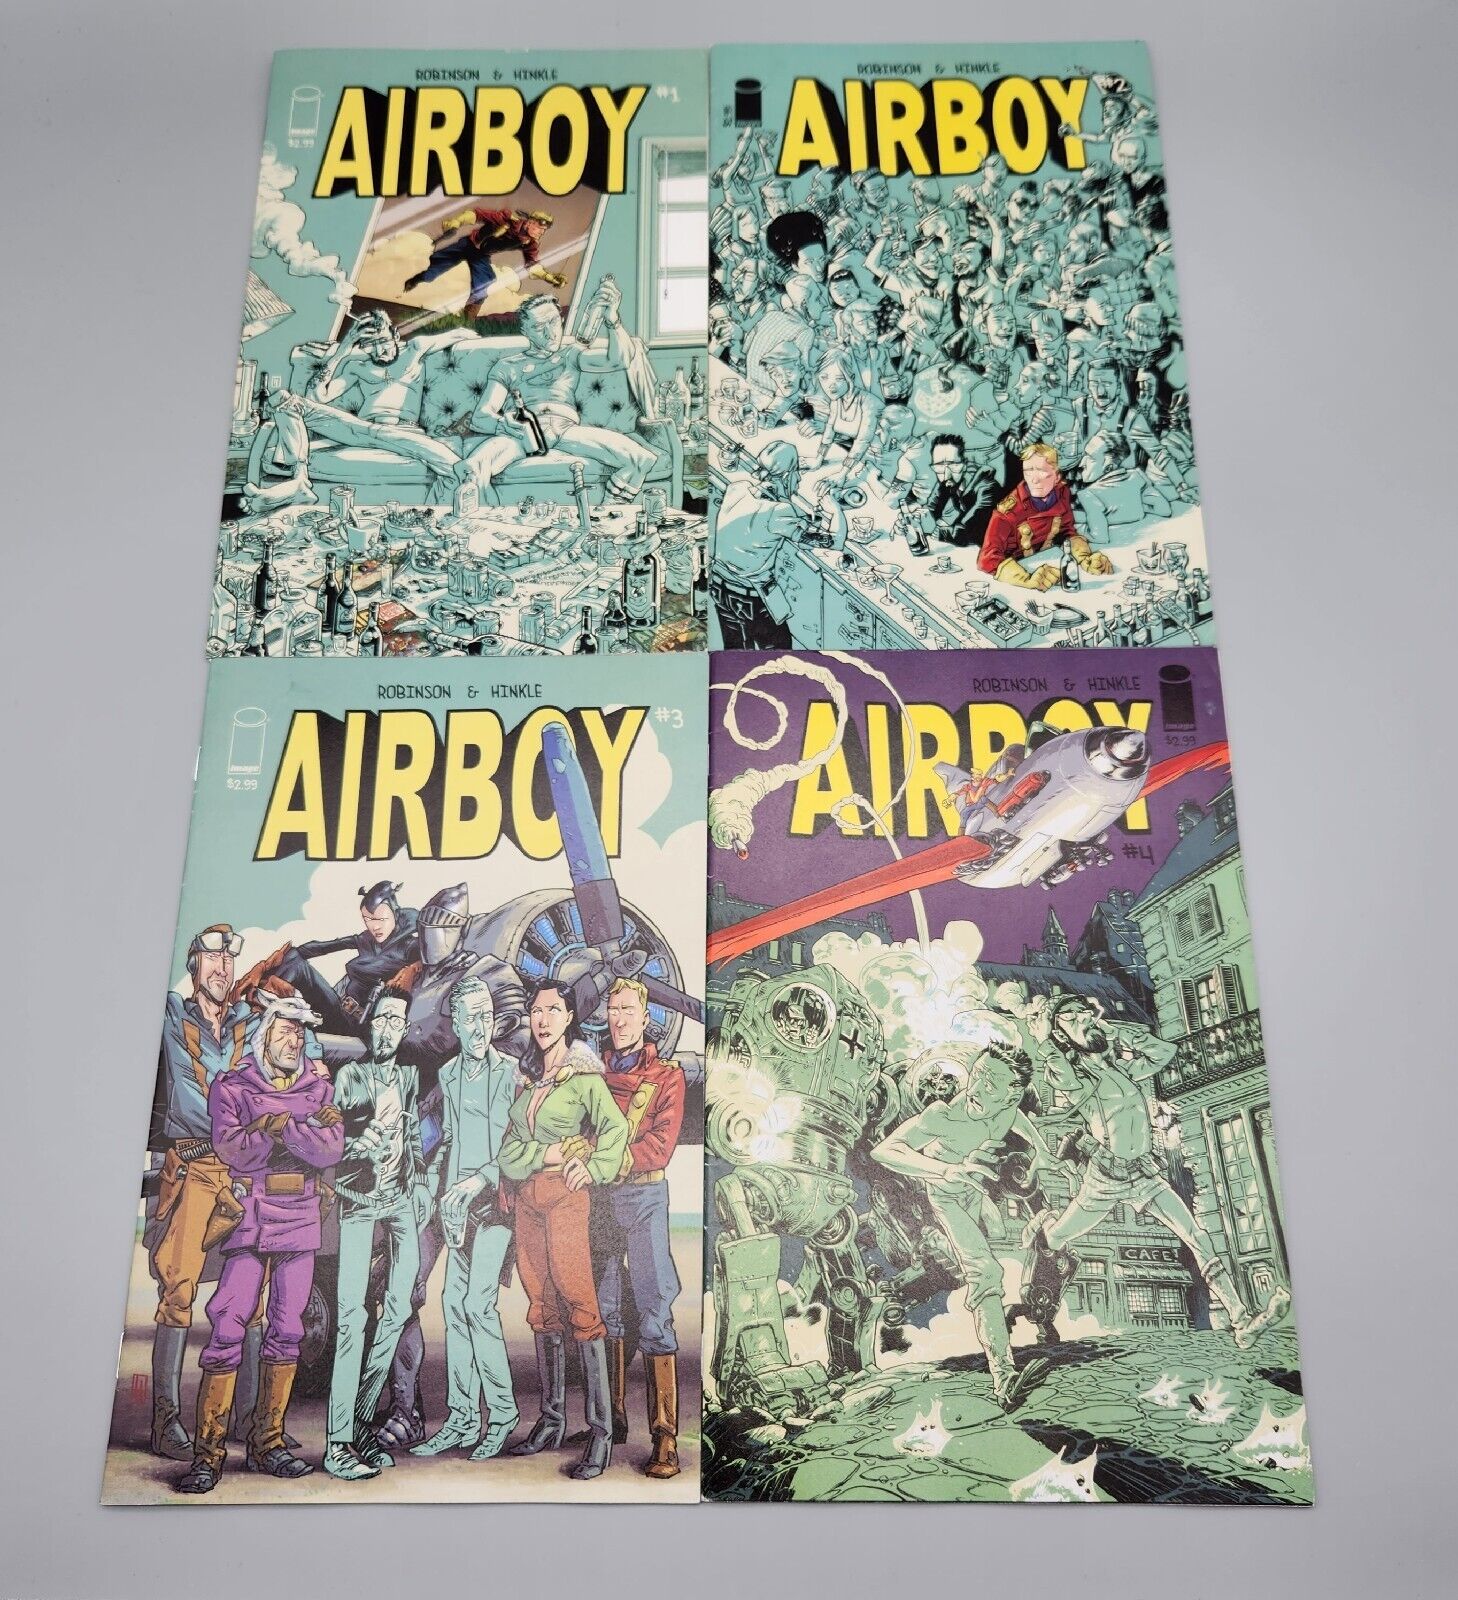 Airboy #1-4 Complete Run Image Comics 2015 James Robinson Greg Hinkle 1 2 3 4 